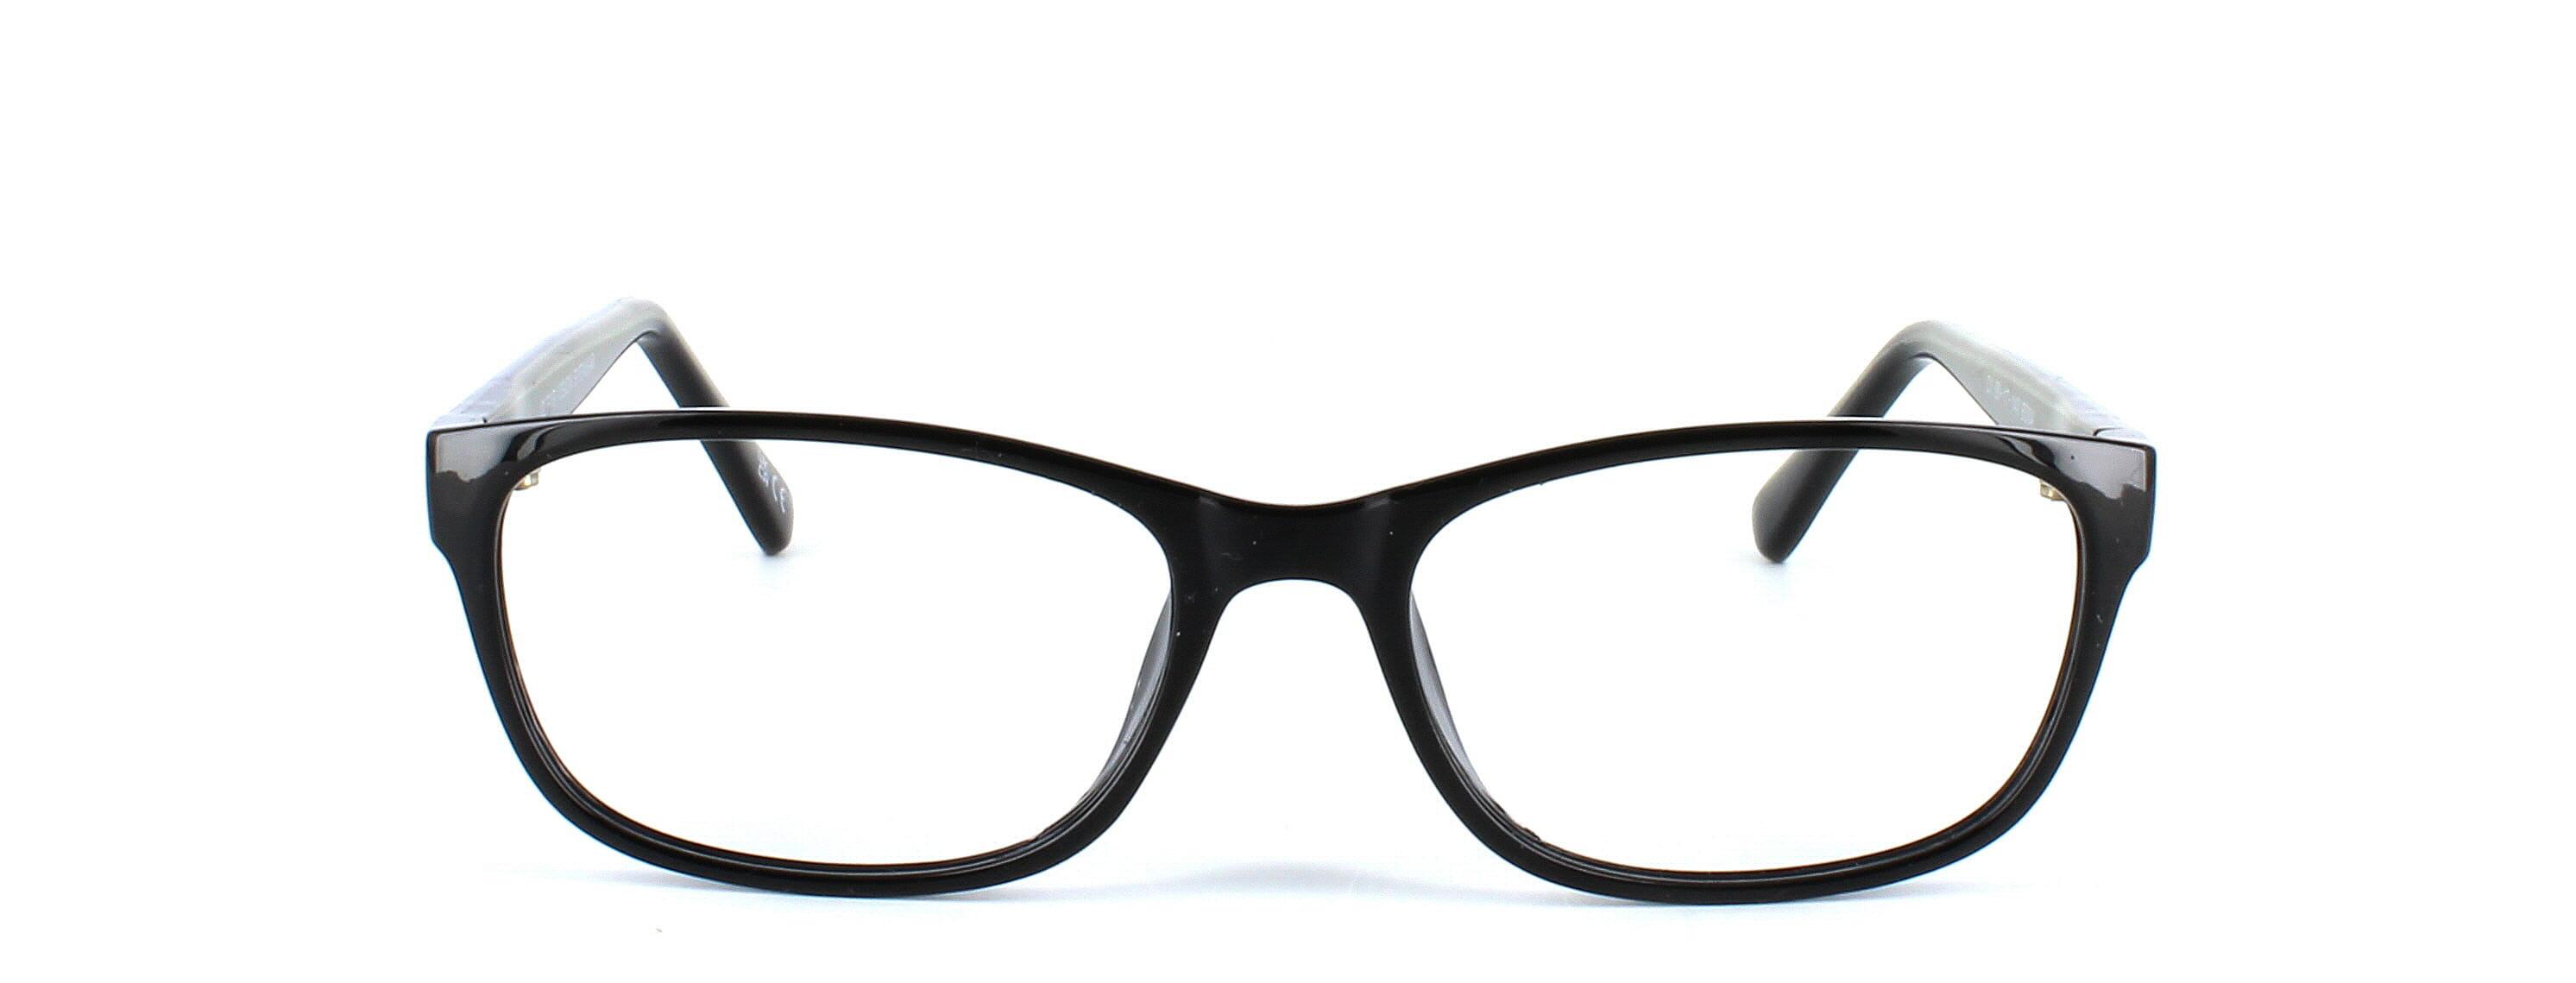 Samba in black - ladies plastic oval shaped glasses frame - image view 2